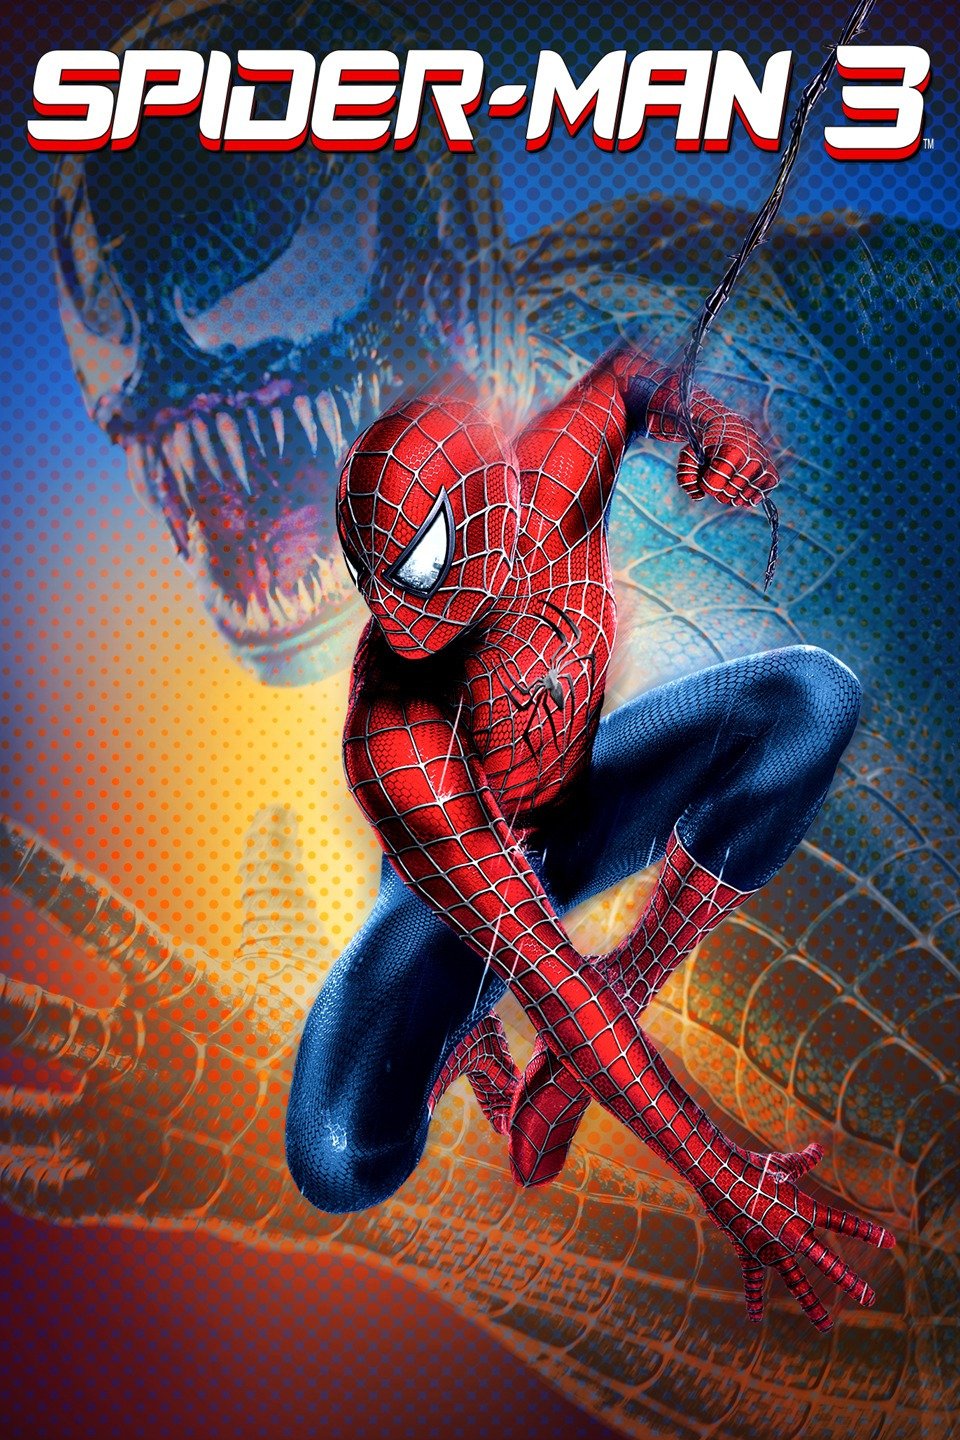 [MINI Super-HQ] Spider-Man 3 (2007) ไอ้แมงมุม 3 [1080p] [พากย์ไทย 5.1 + อังกฤษ DTS] [BluRay.DTS.x264] [บรรยายไทย + อังกฤษ] [เสียงไทย + ซับไทย]